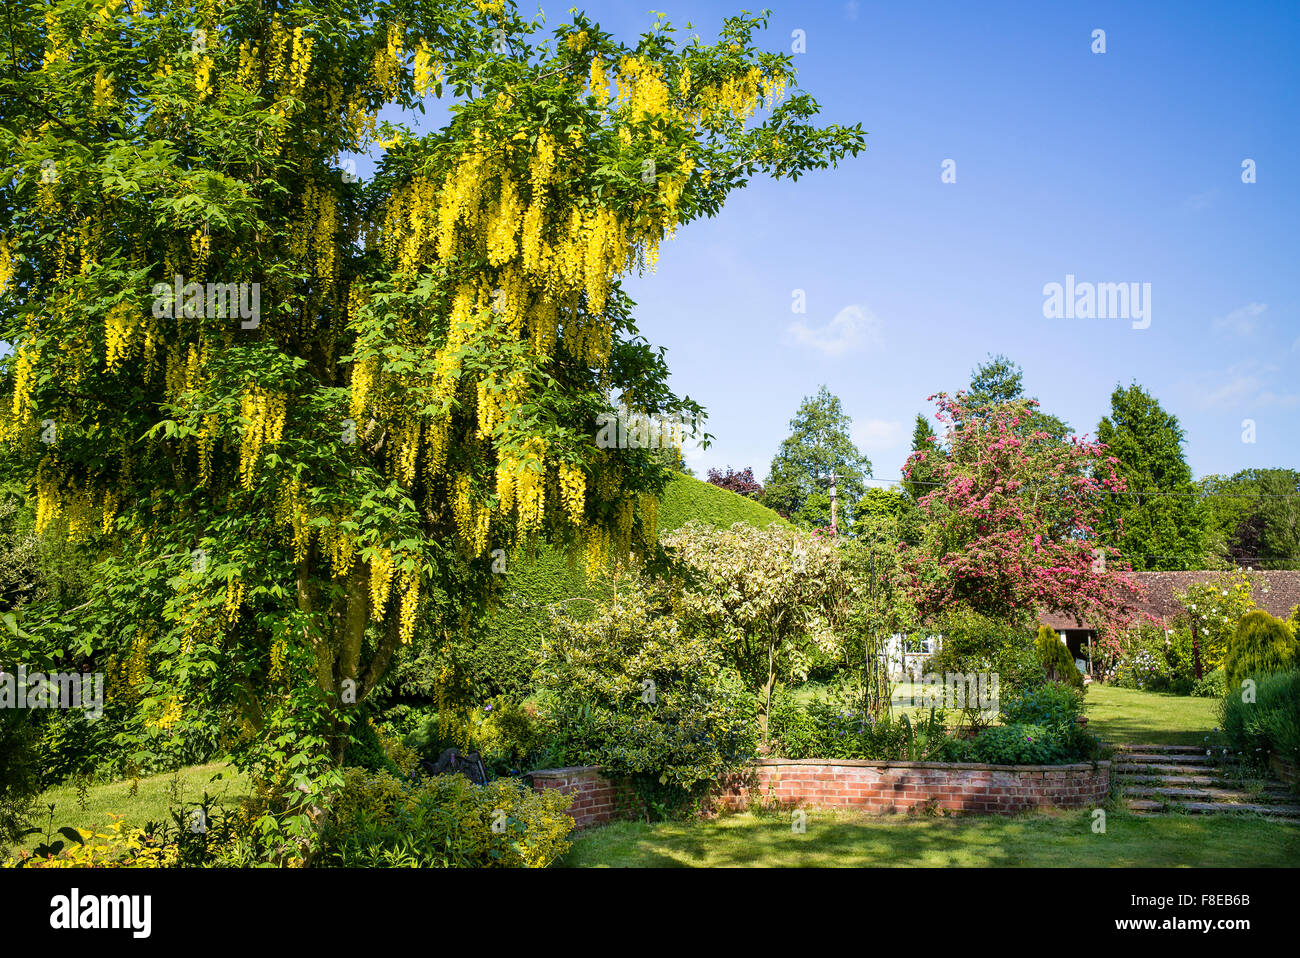 Flowering laburnum tree in a country English garden Stock Photo